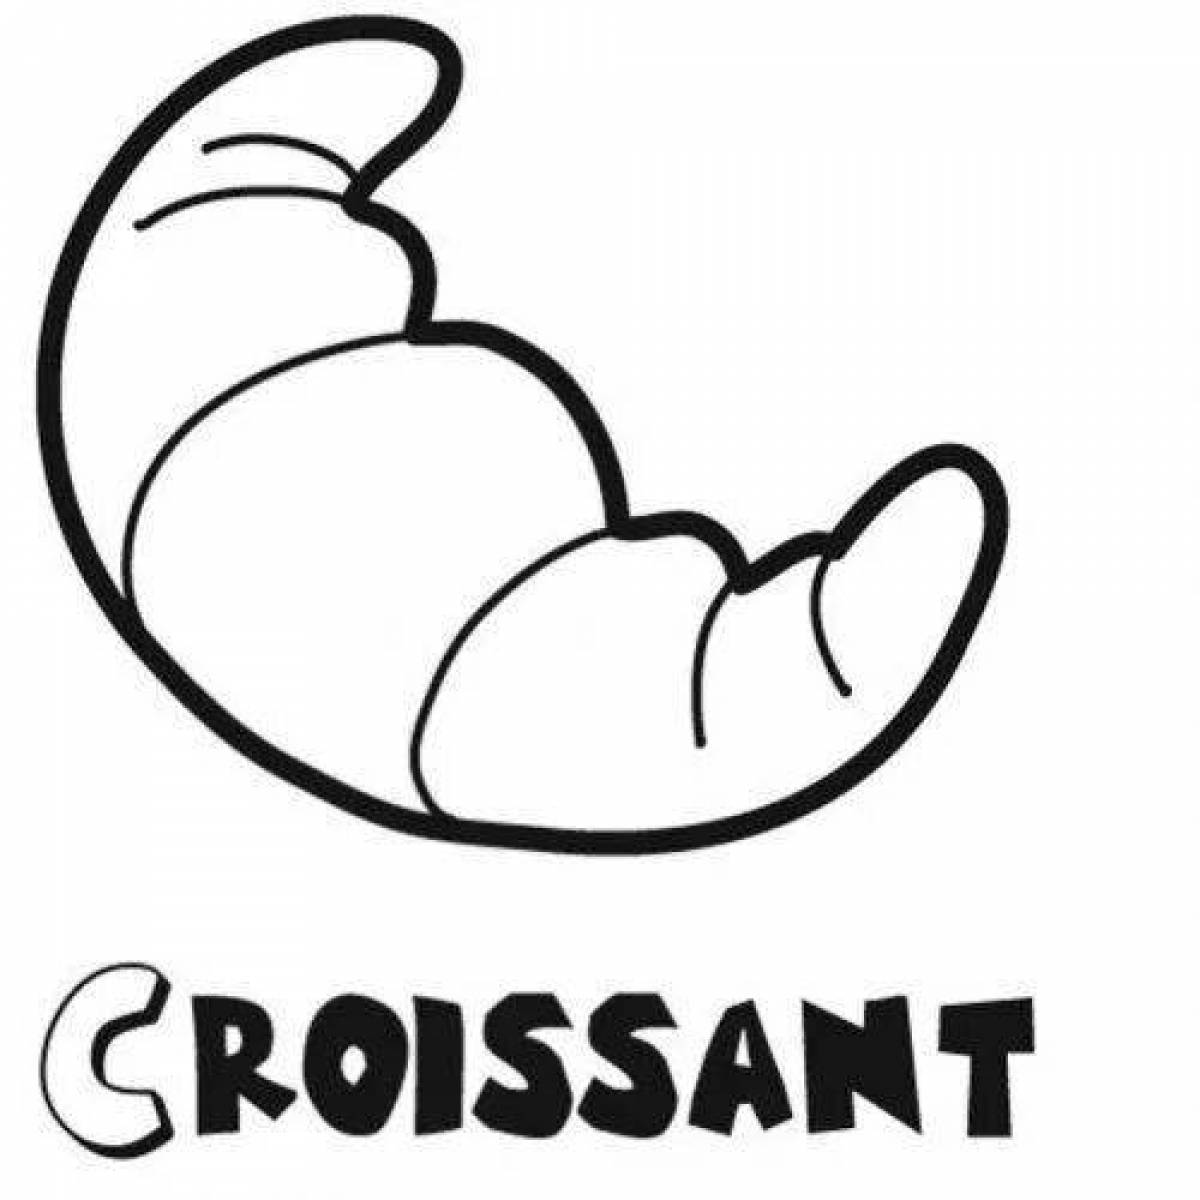 Croissant coloring book